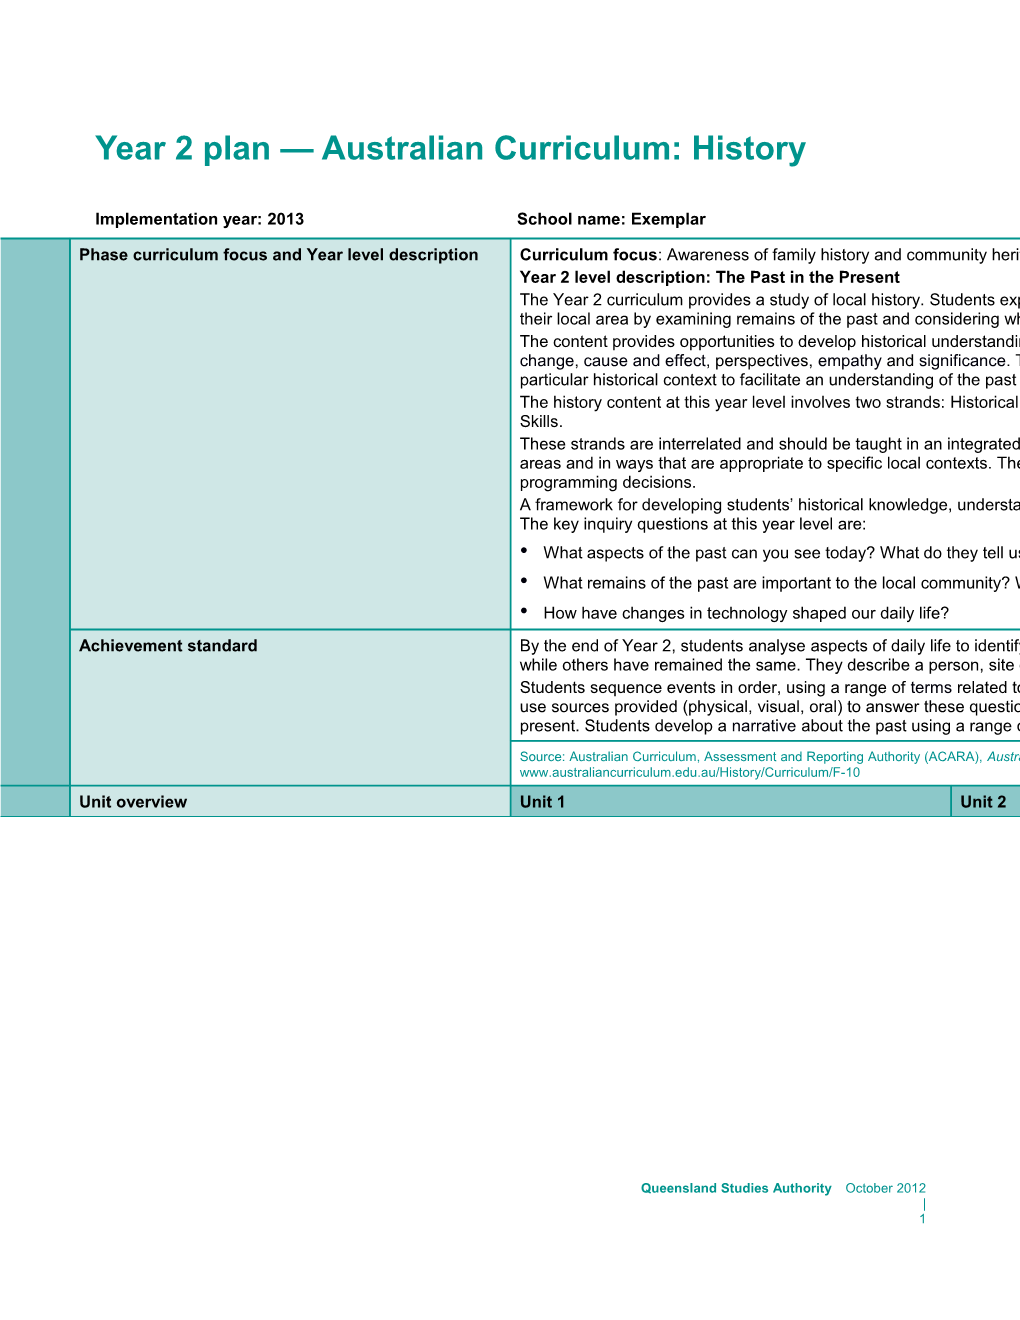 Year 2 Plan Australian Curriculum: History Template (P 2)